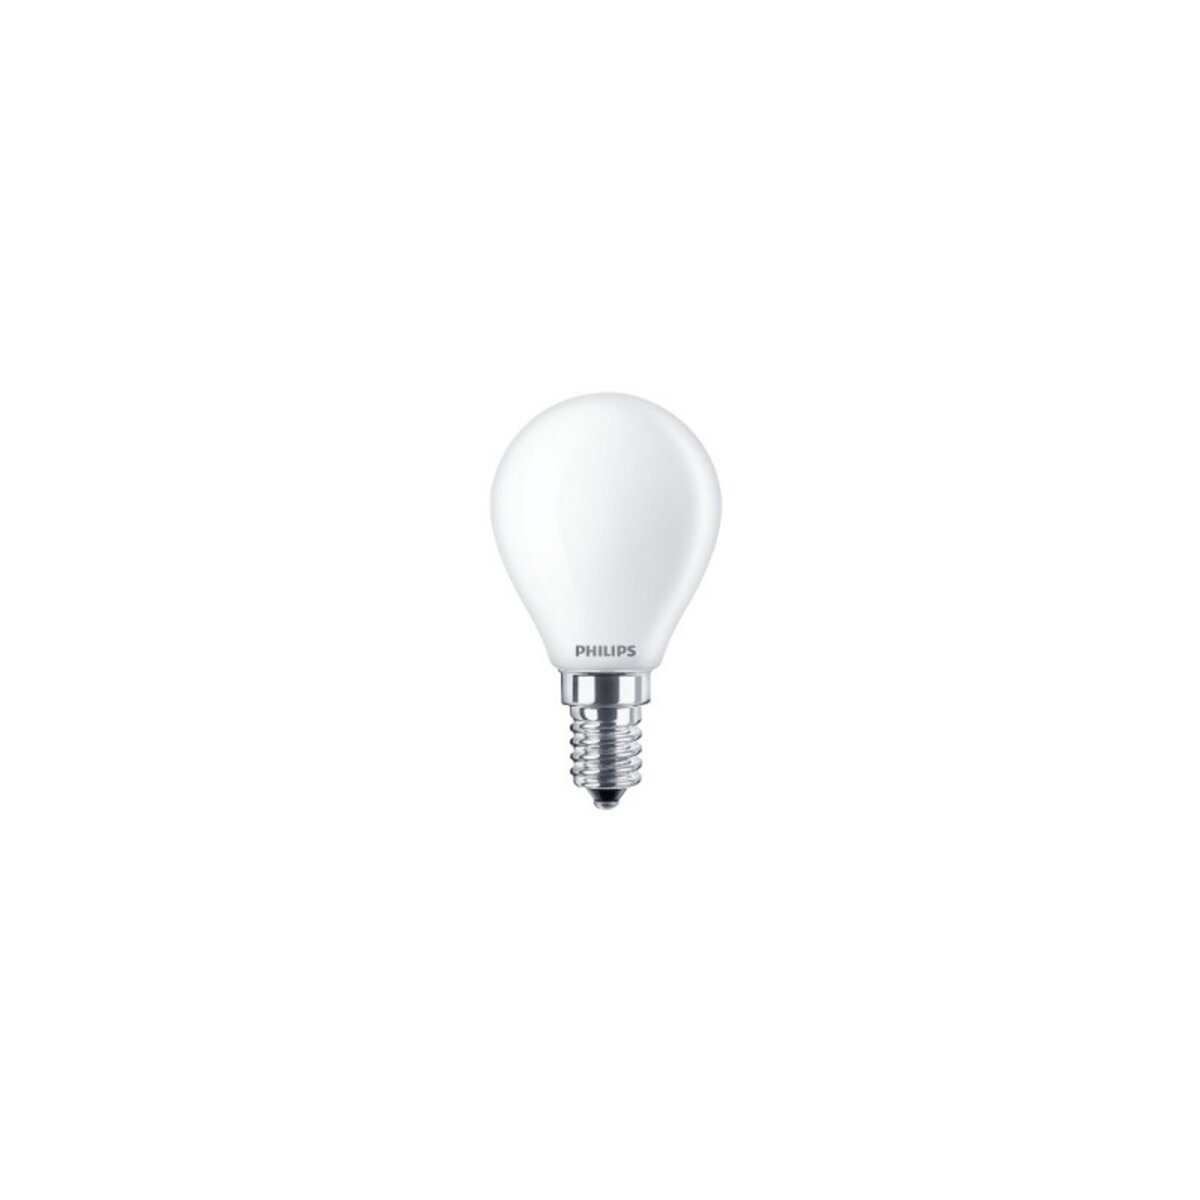 Philips Ampoule LED sphéroïdale PHILIPS - EyeComfort - 4,3W - 470 lumens - 6500K - E14 - 93016